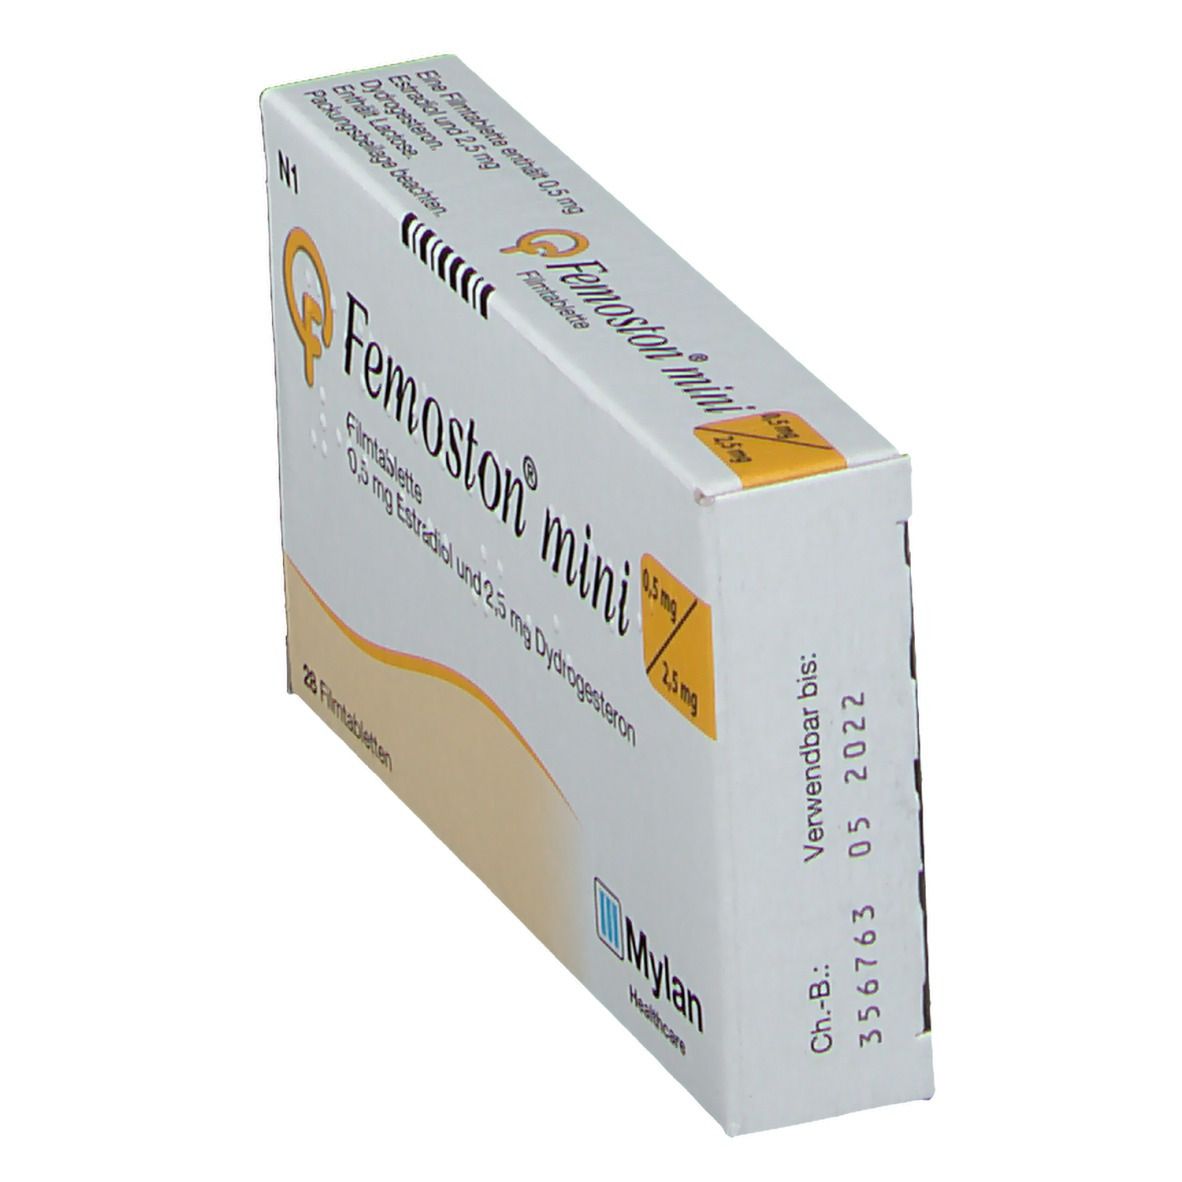 Femoston® mini 0,5 mg/2,5 mg